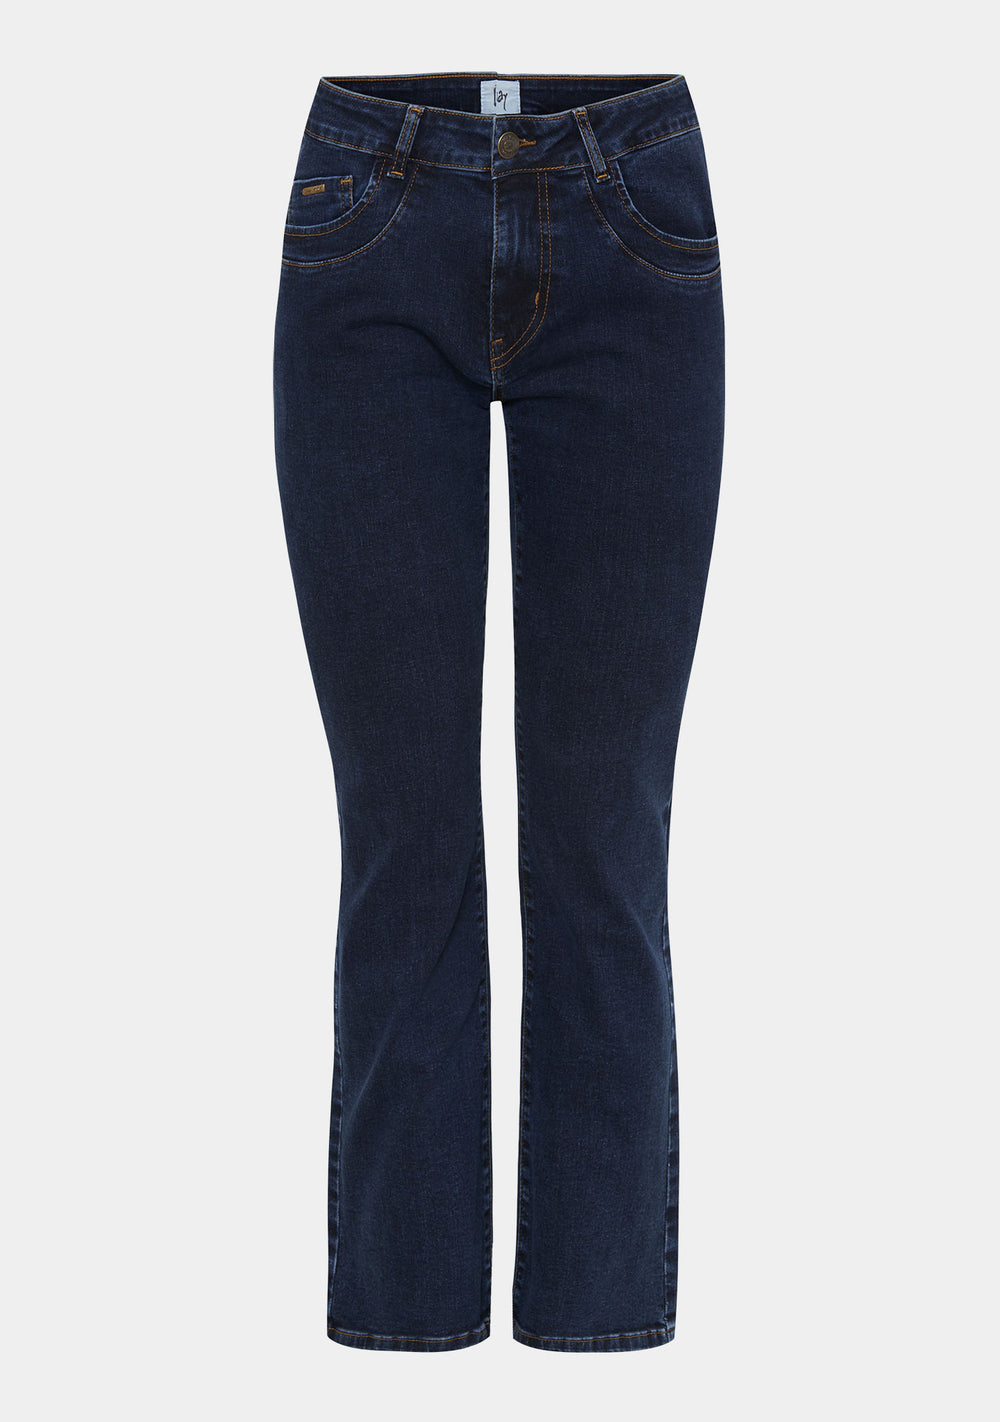 I SAY Parma Long Basic Jeans Pants 654 Blue Denim